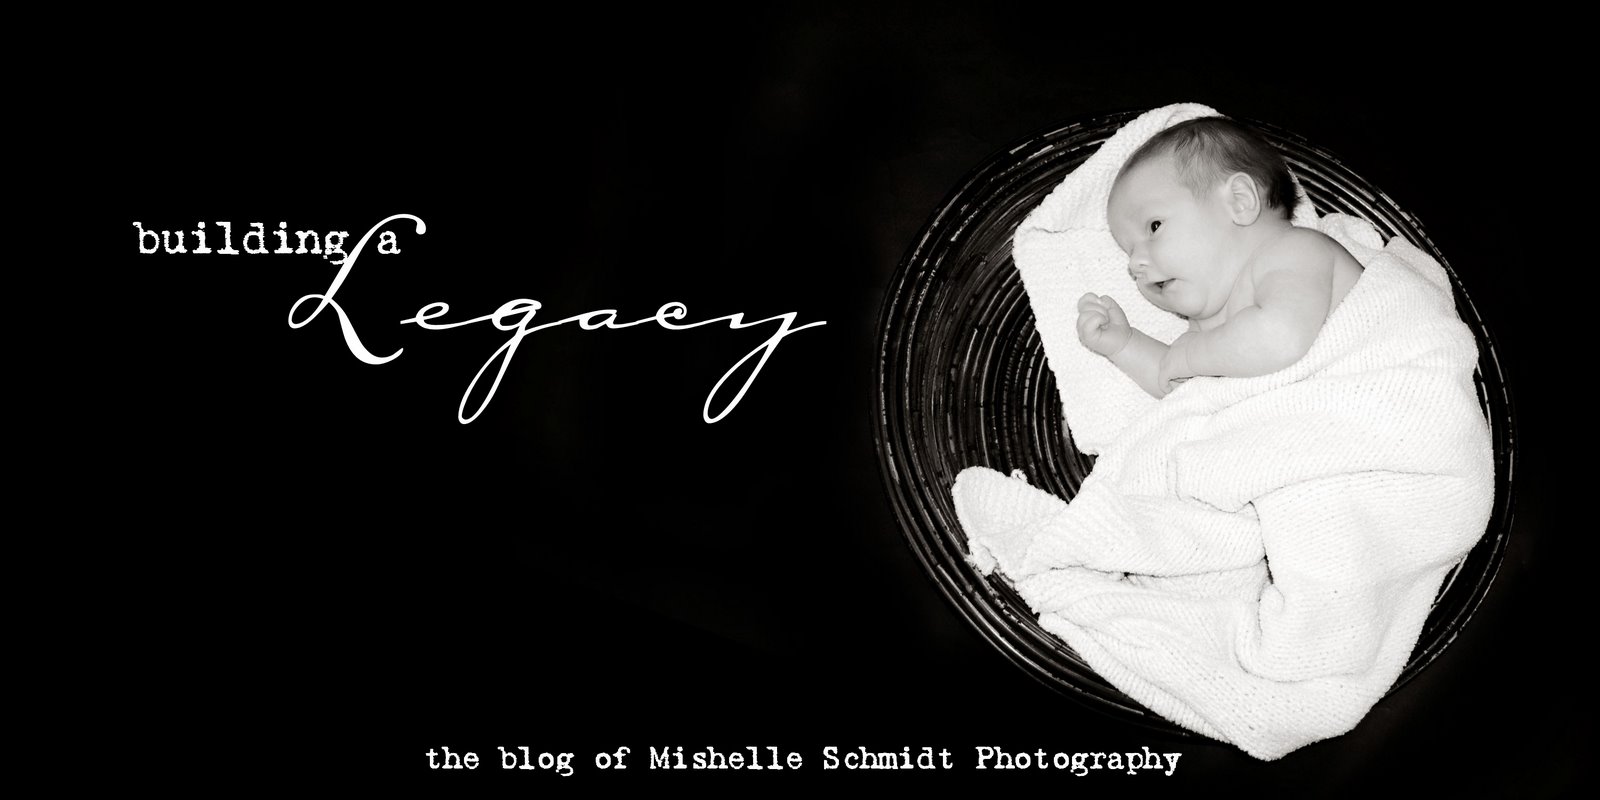 Mishelle Schmidt Photography